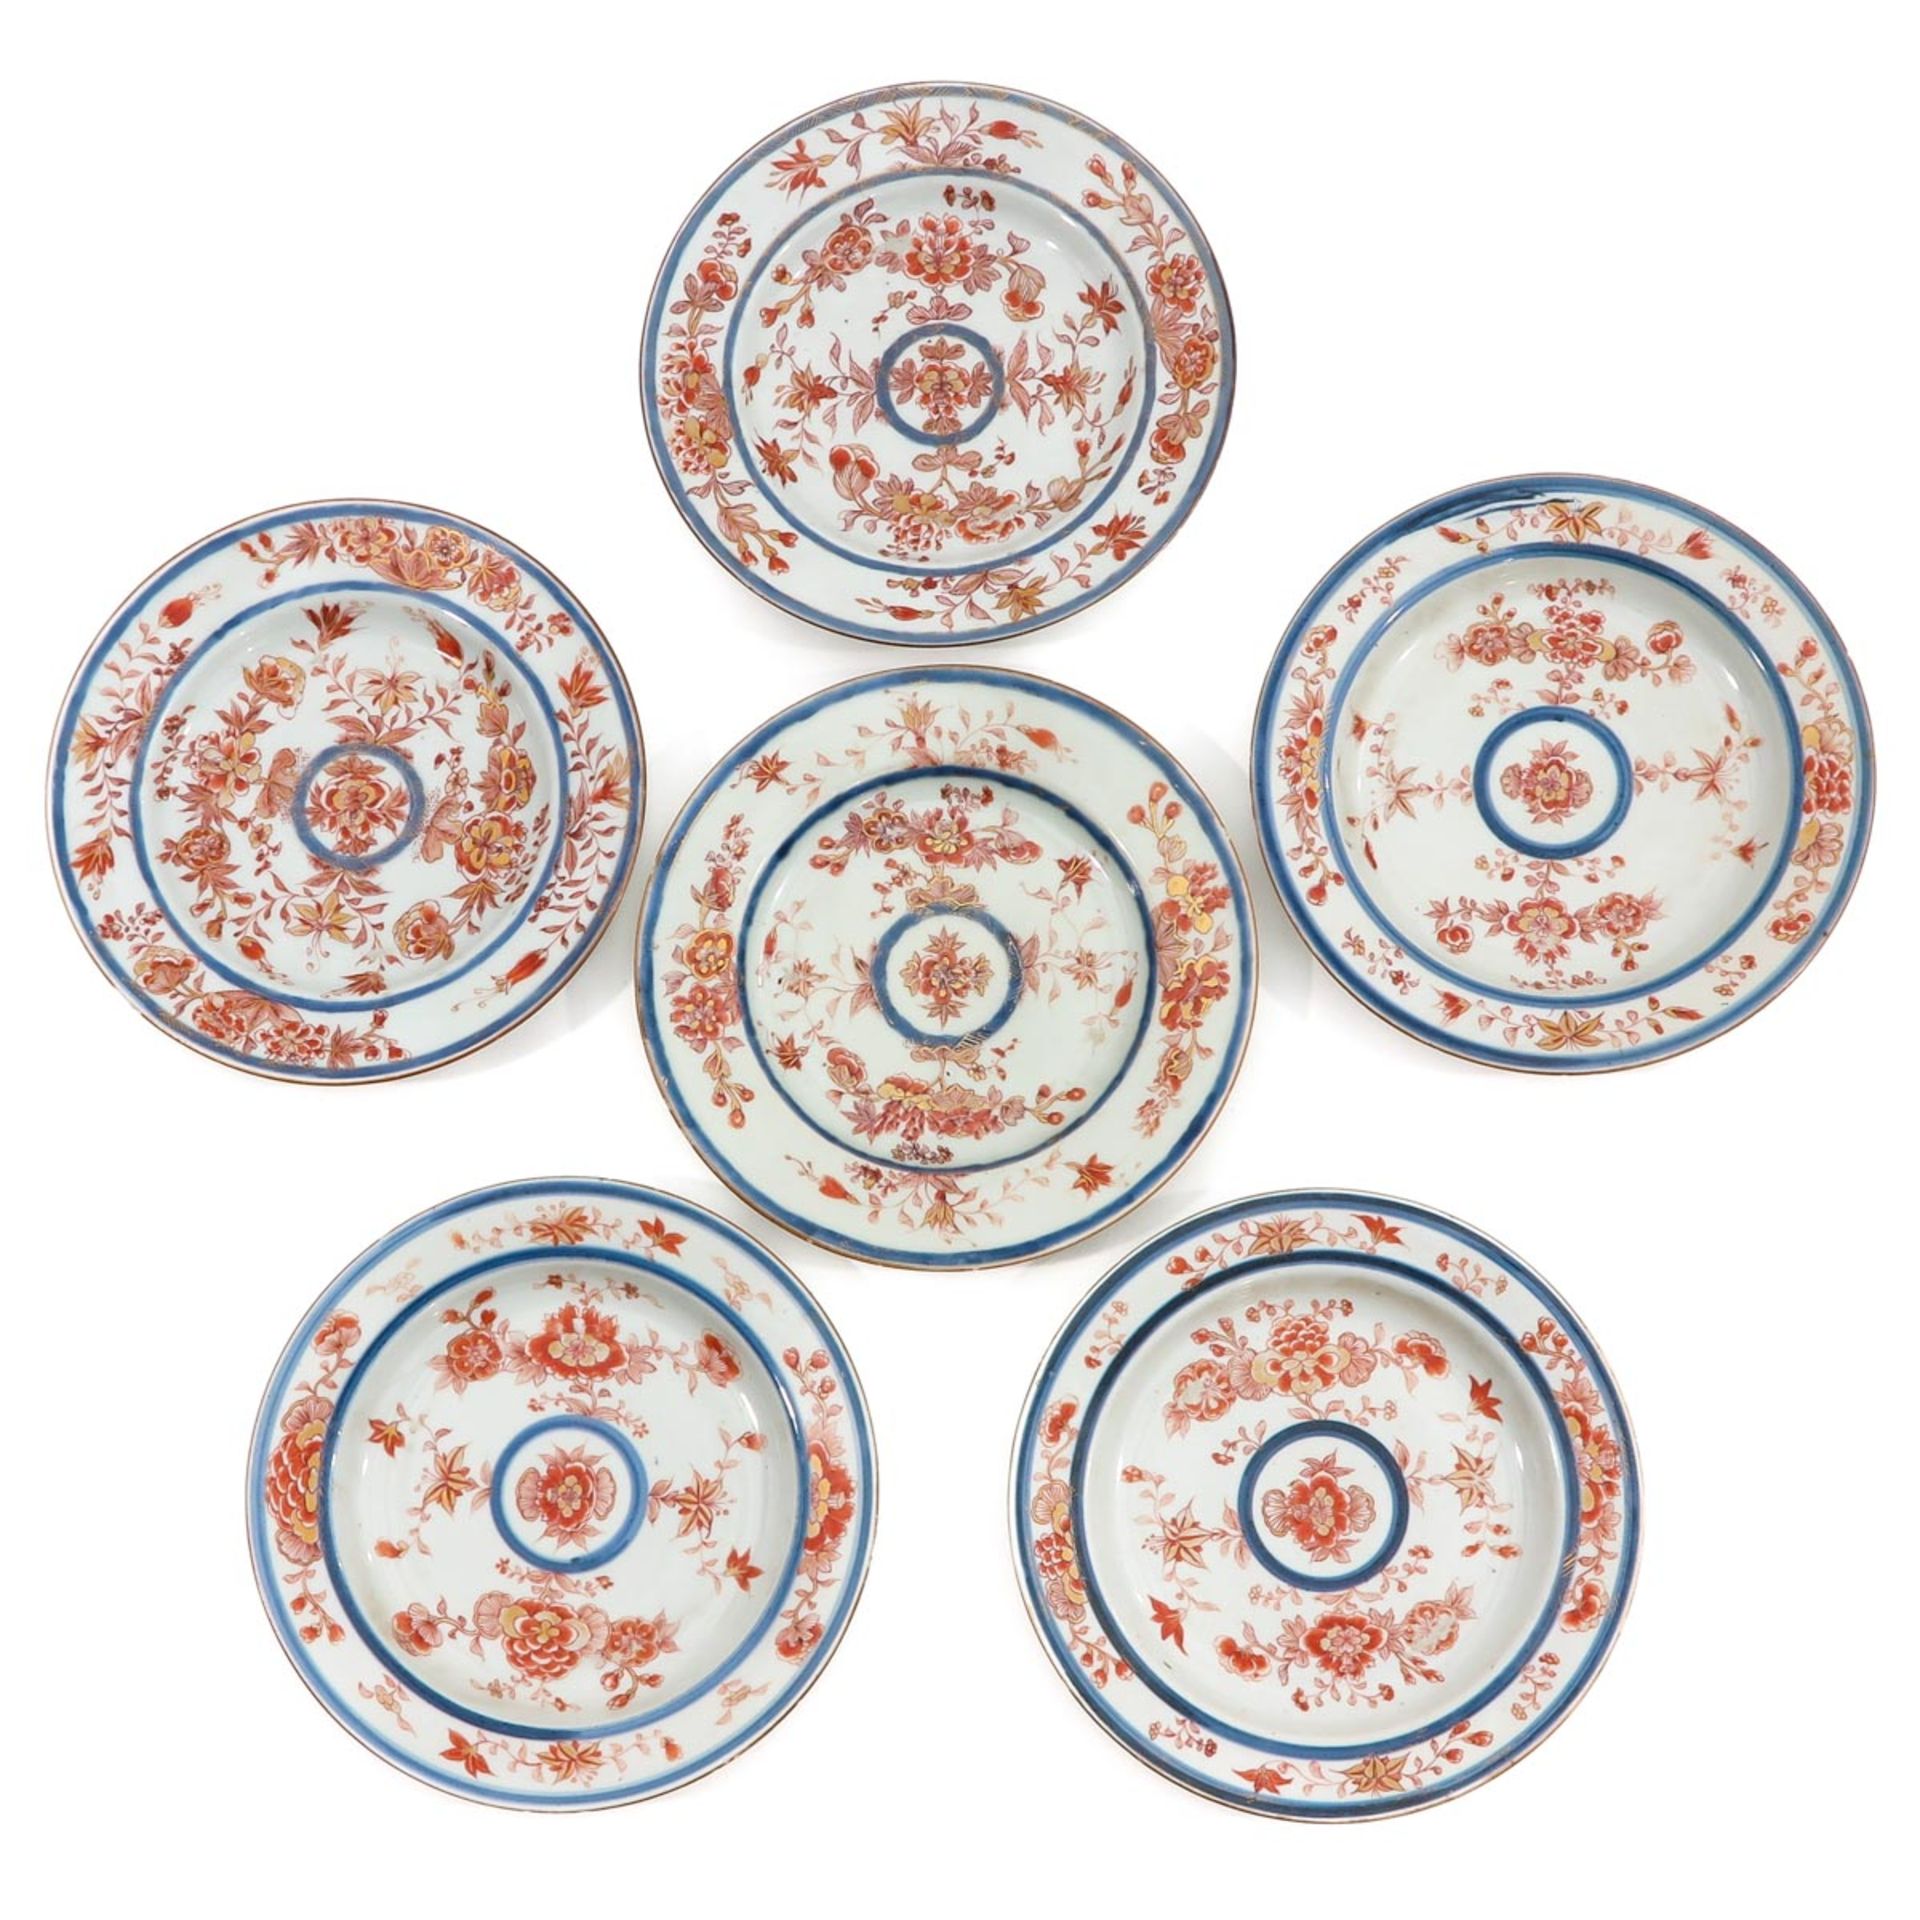 A Series of 6 Imari Plates